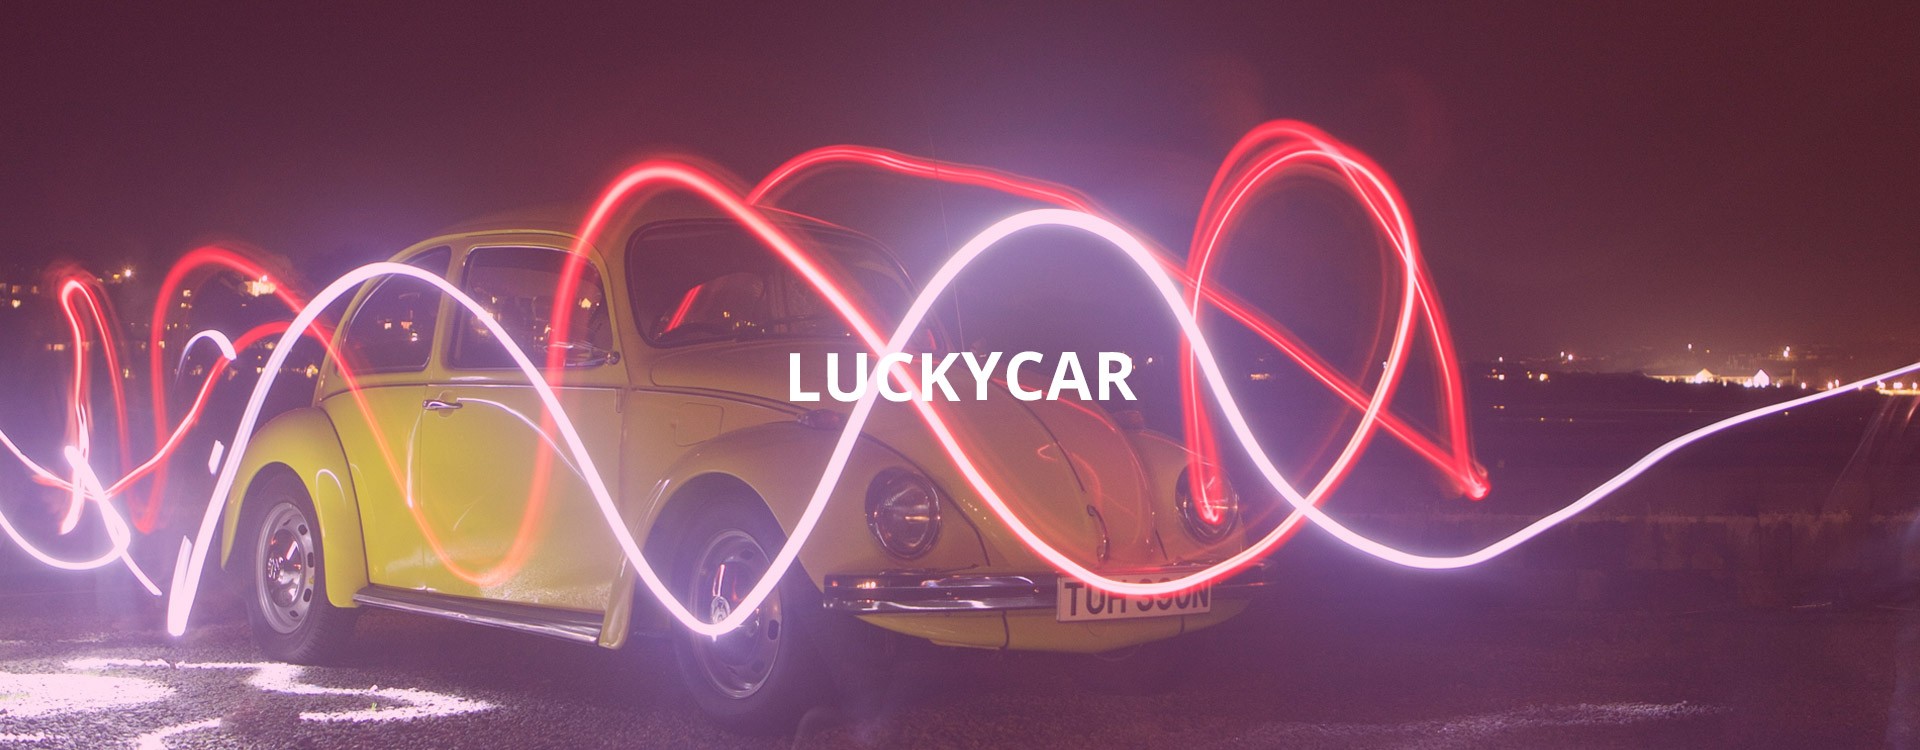 Luckycar